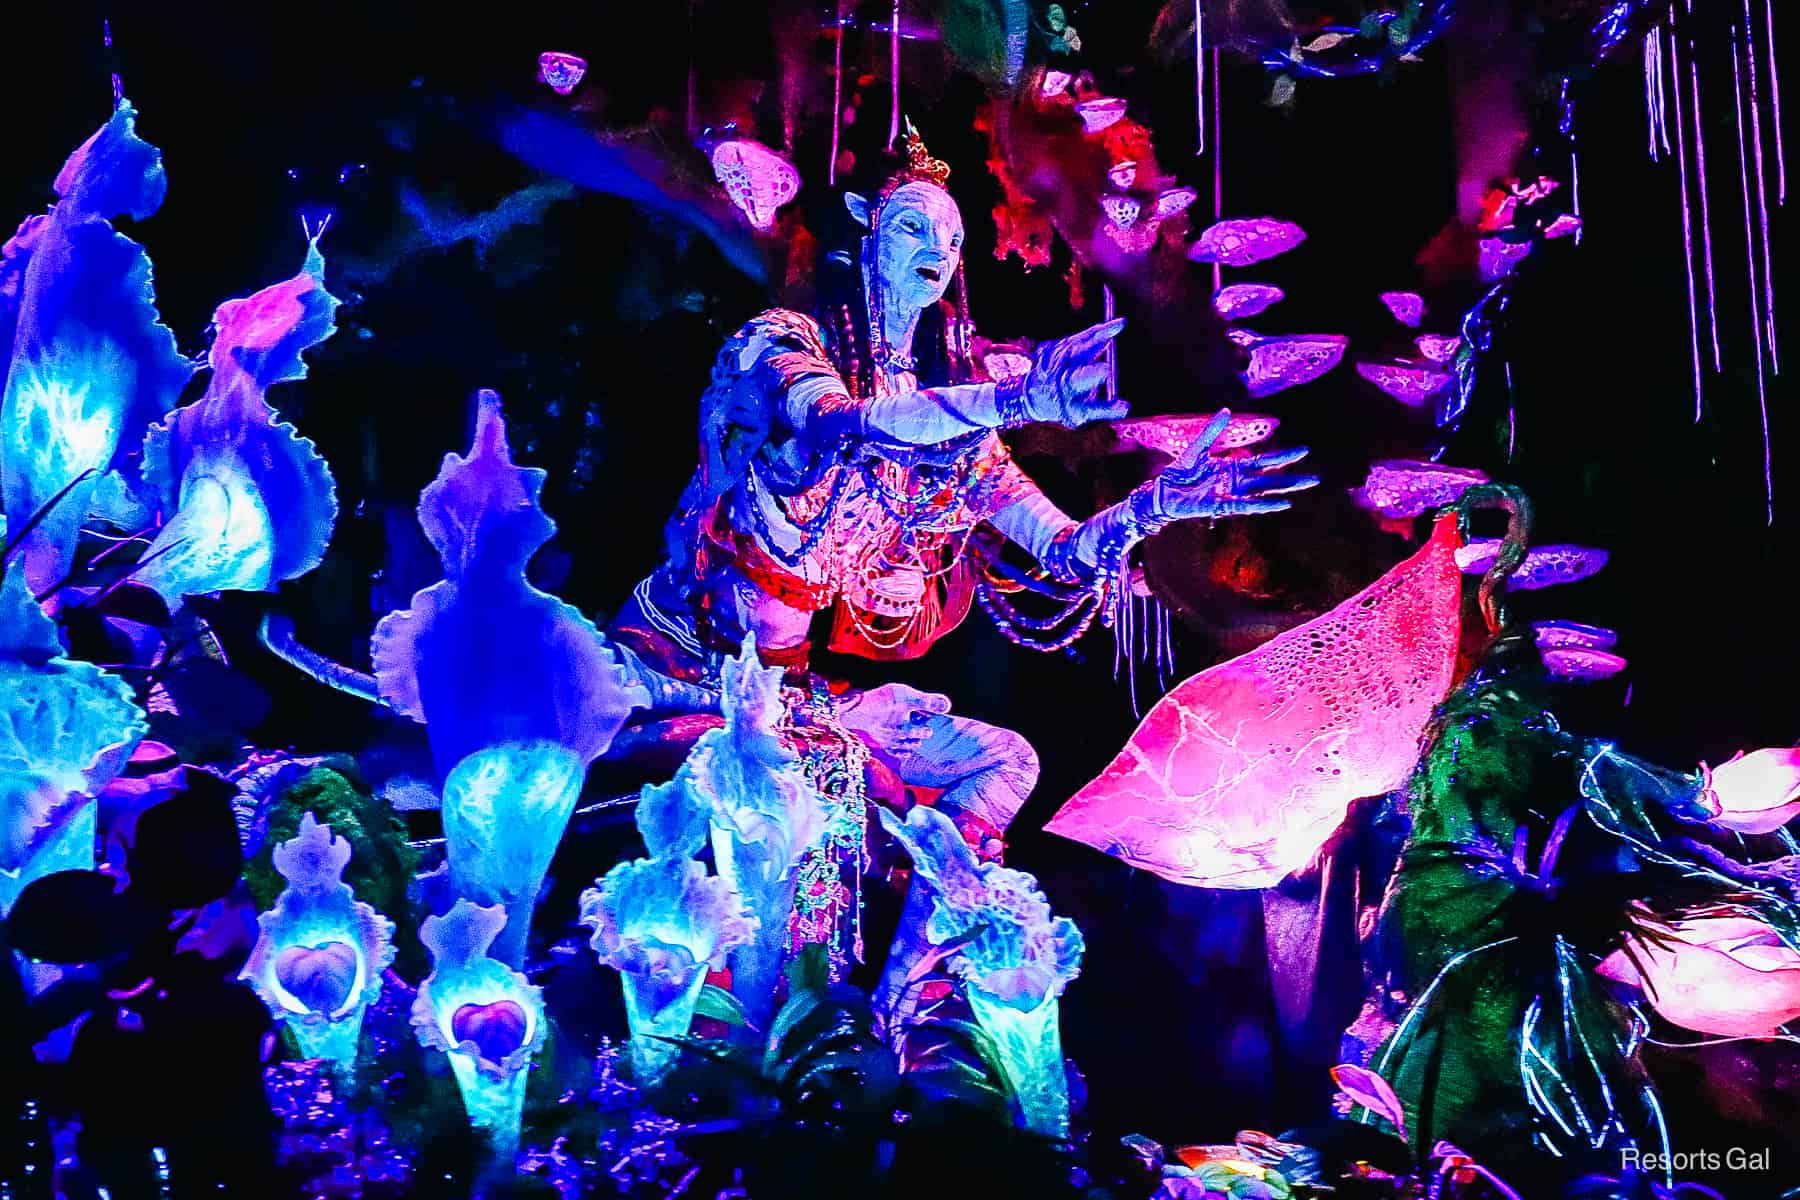 the shaman of songs on Na'vi River Journey at Disney's Animal Kingdom